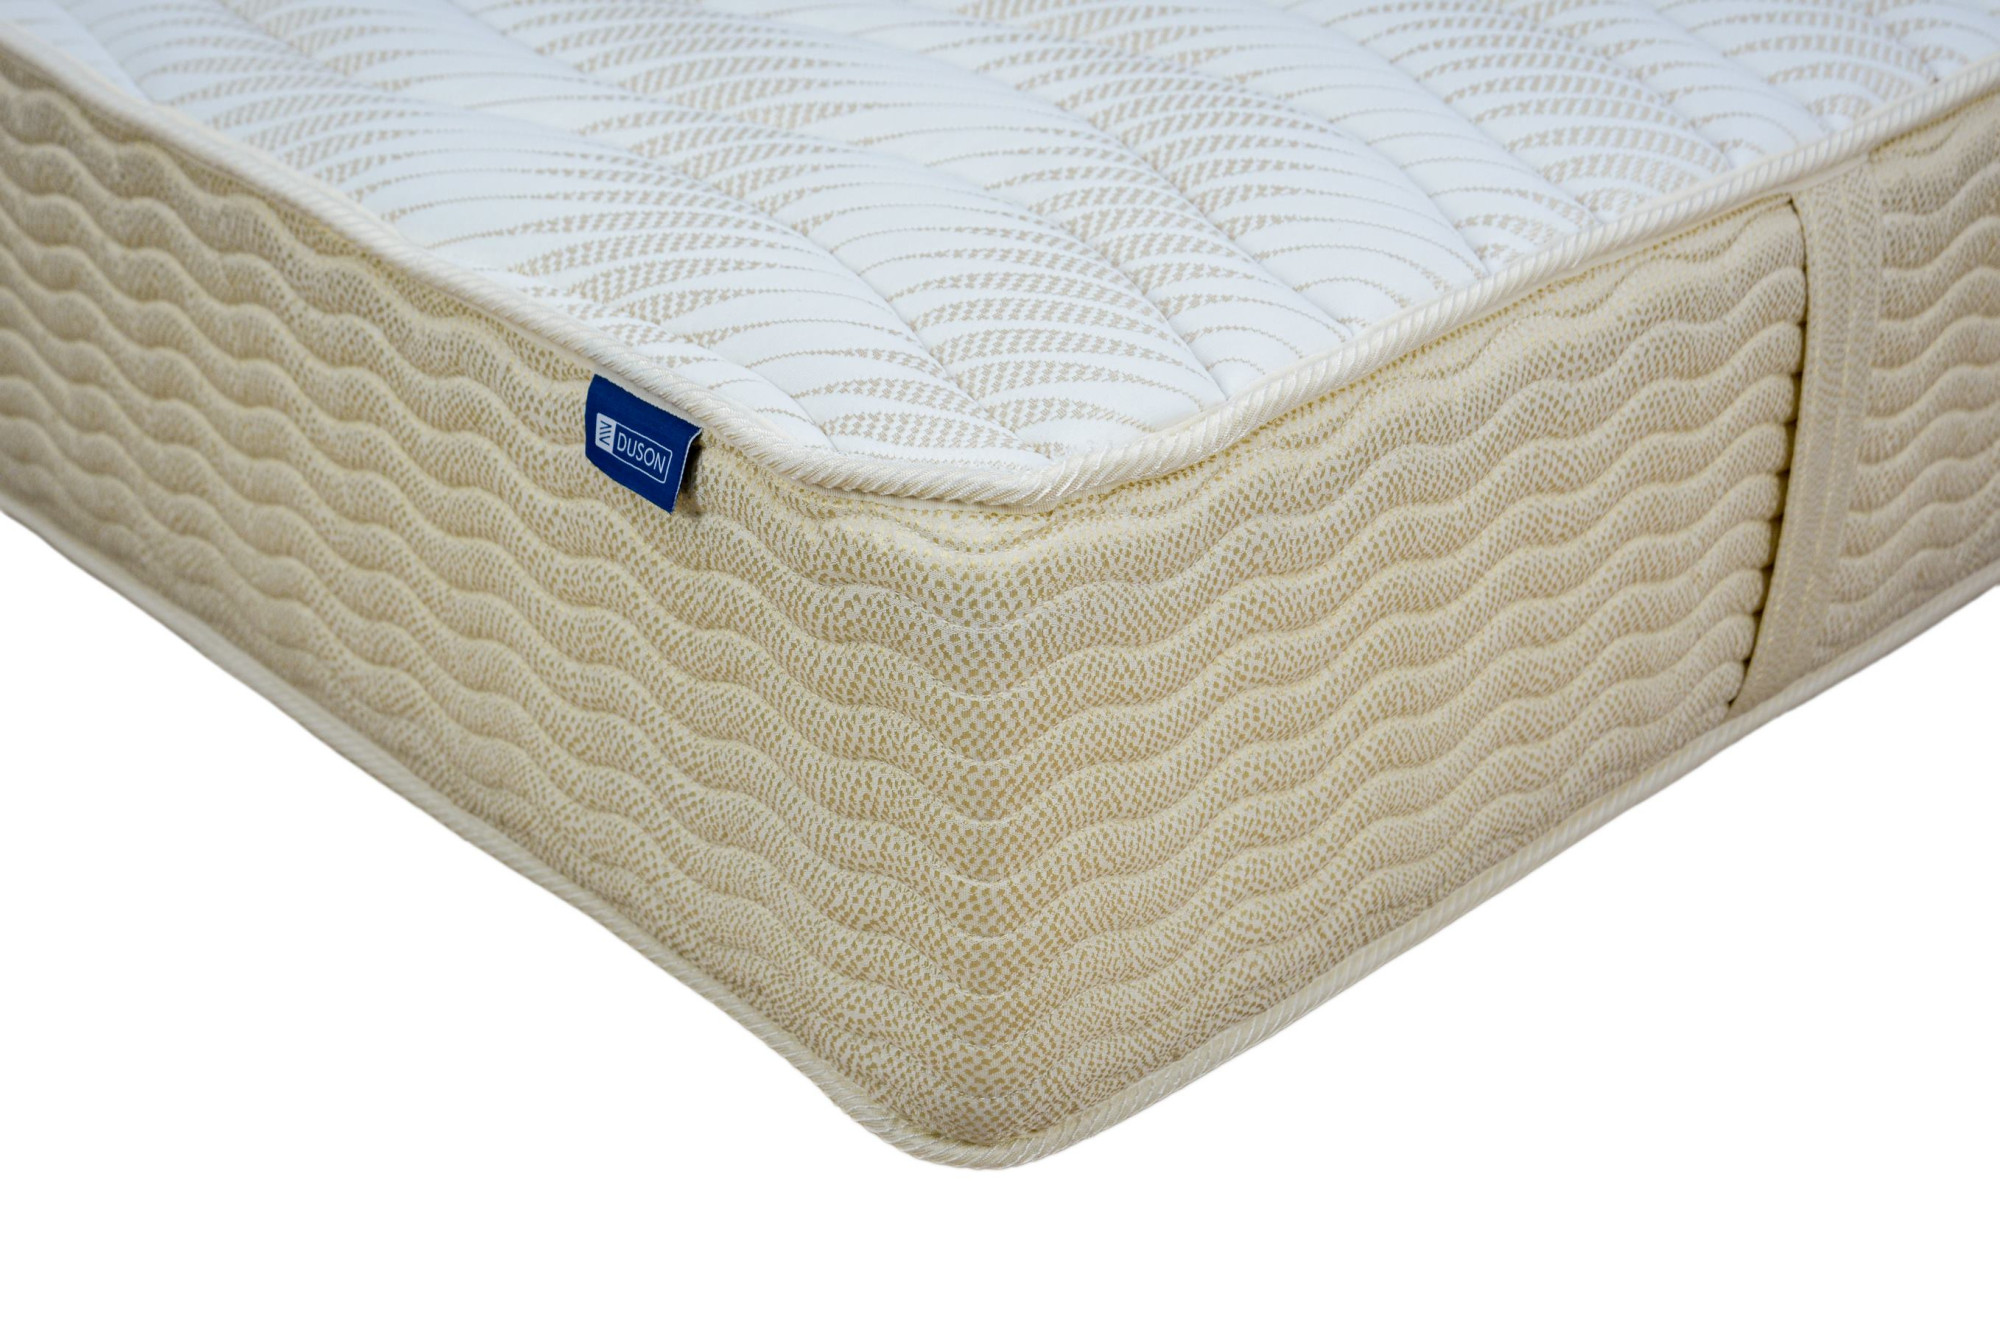 Orthopedic mattress Continental Supreme 120x190 medium, 31cm